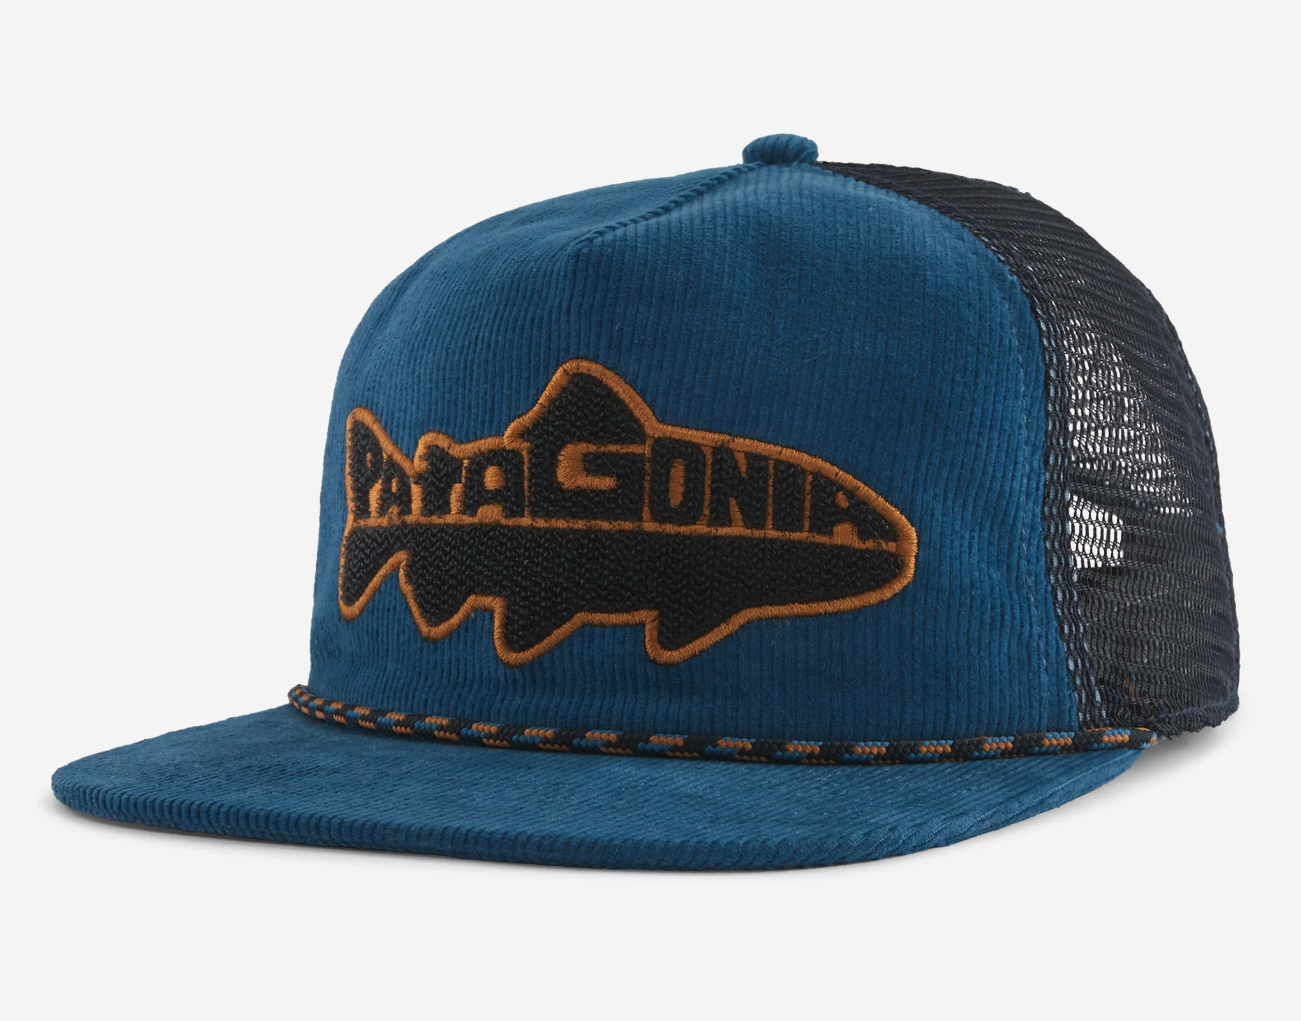  Patagonia Hats